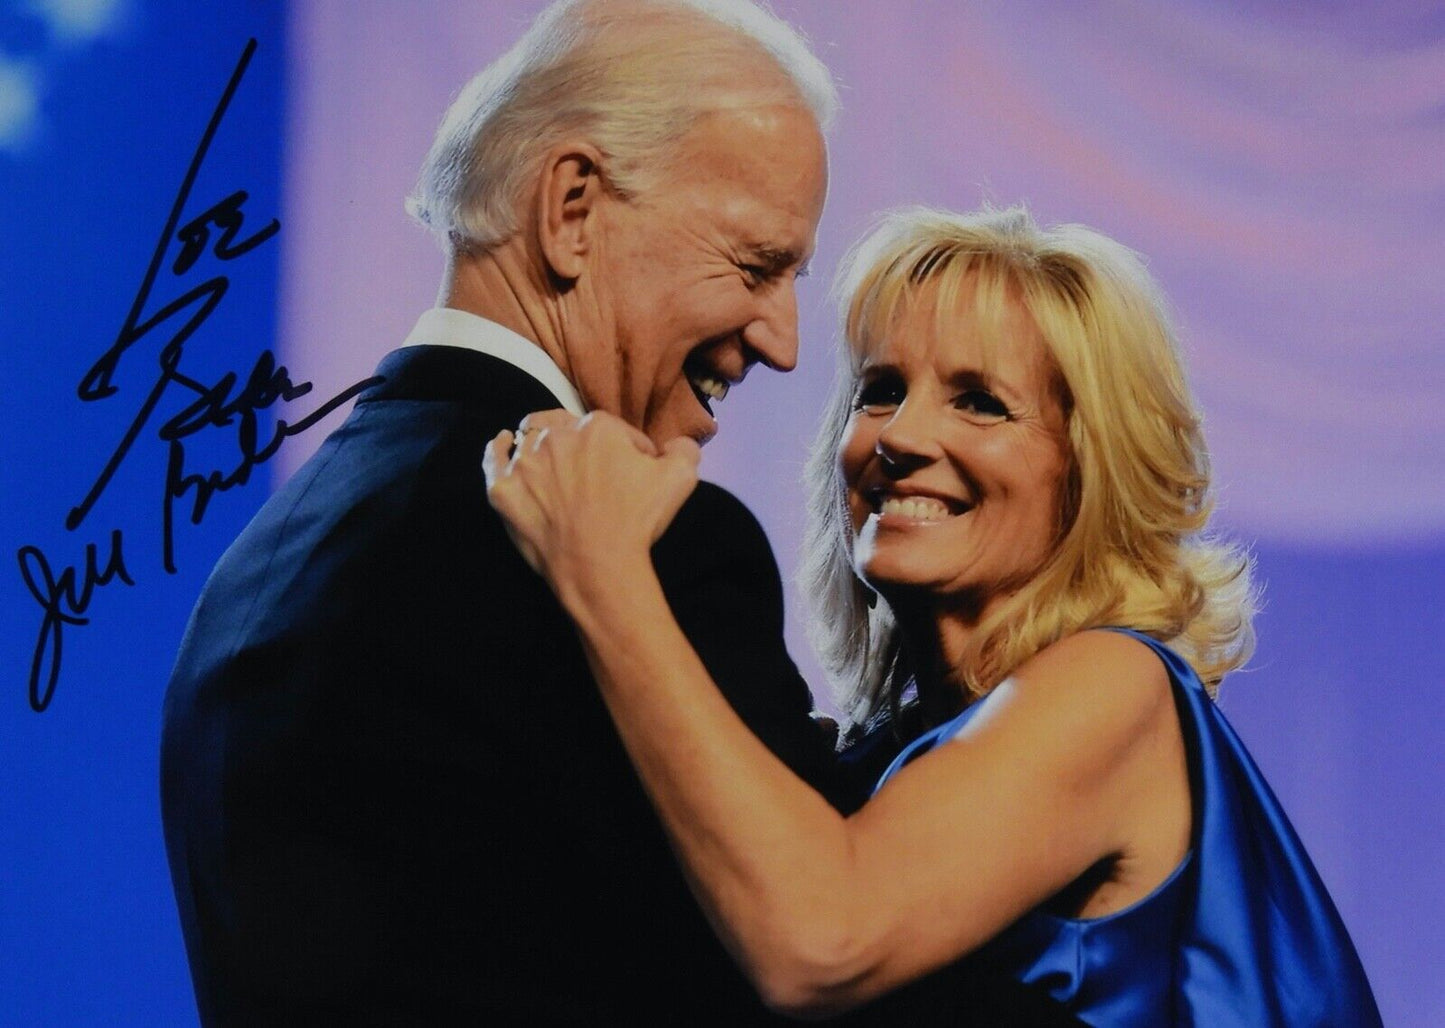 Joe Biden and Jill 46th President JSA Autograph Signed Photo COA 8 x 10